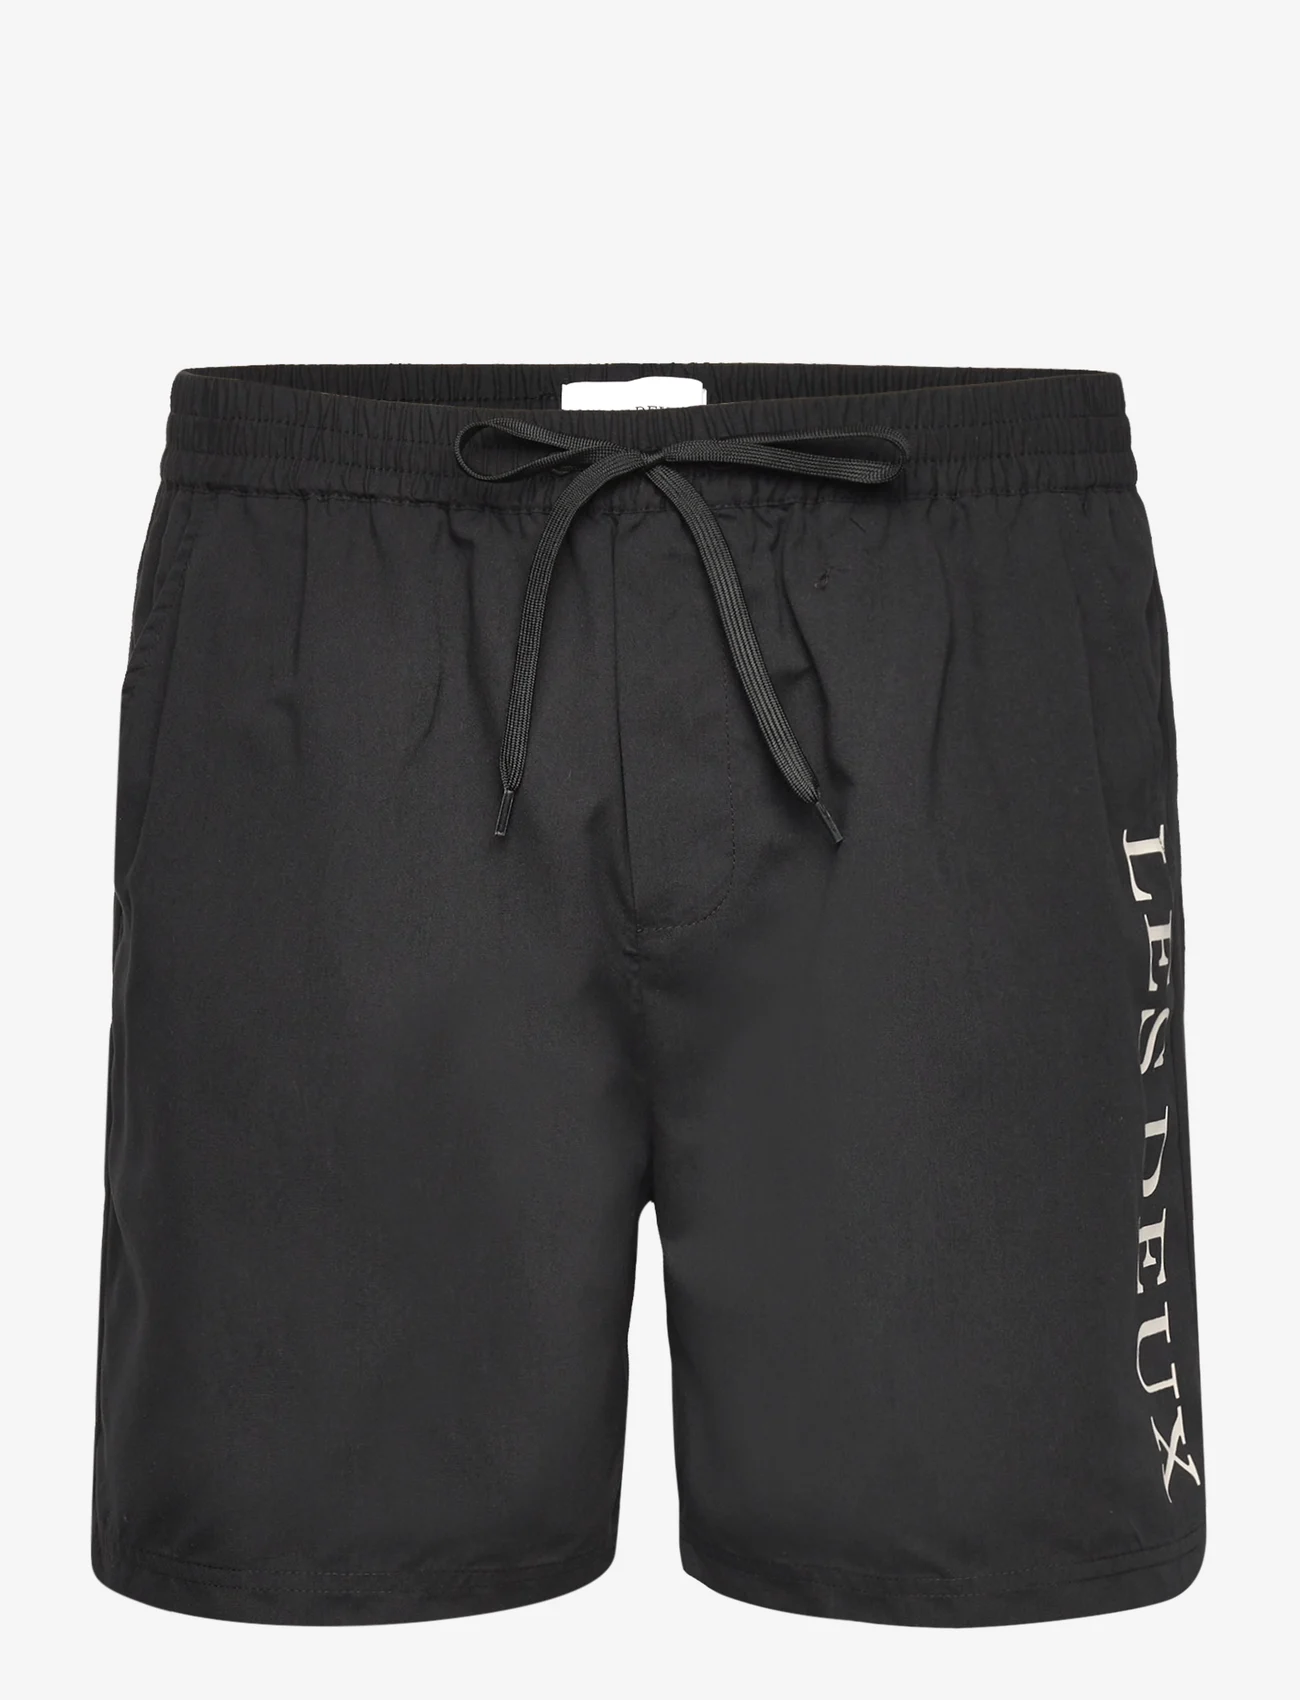 Les Deux - Les Deux Logo Swim Shorts - swim shorts - black/ivory - 0